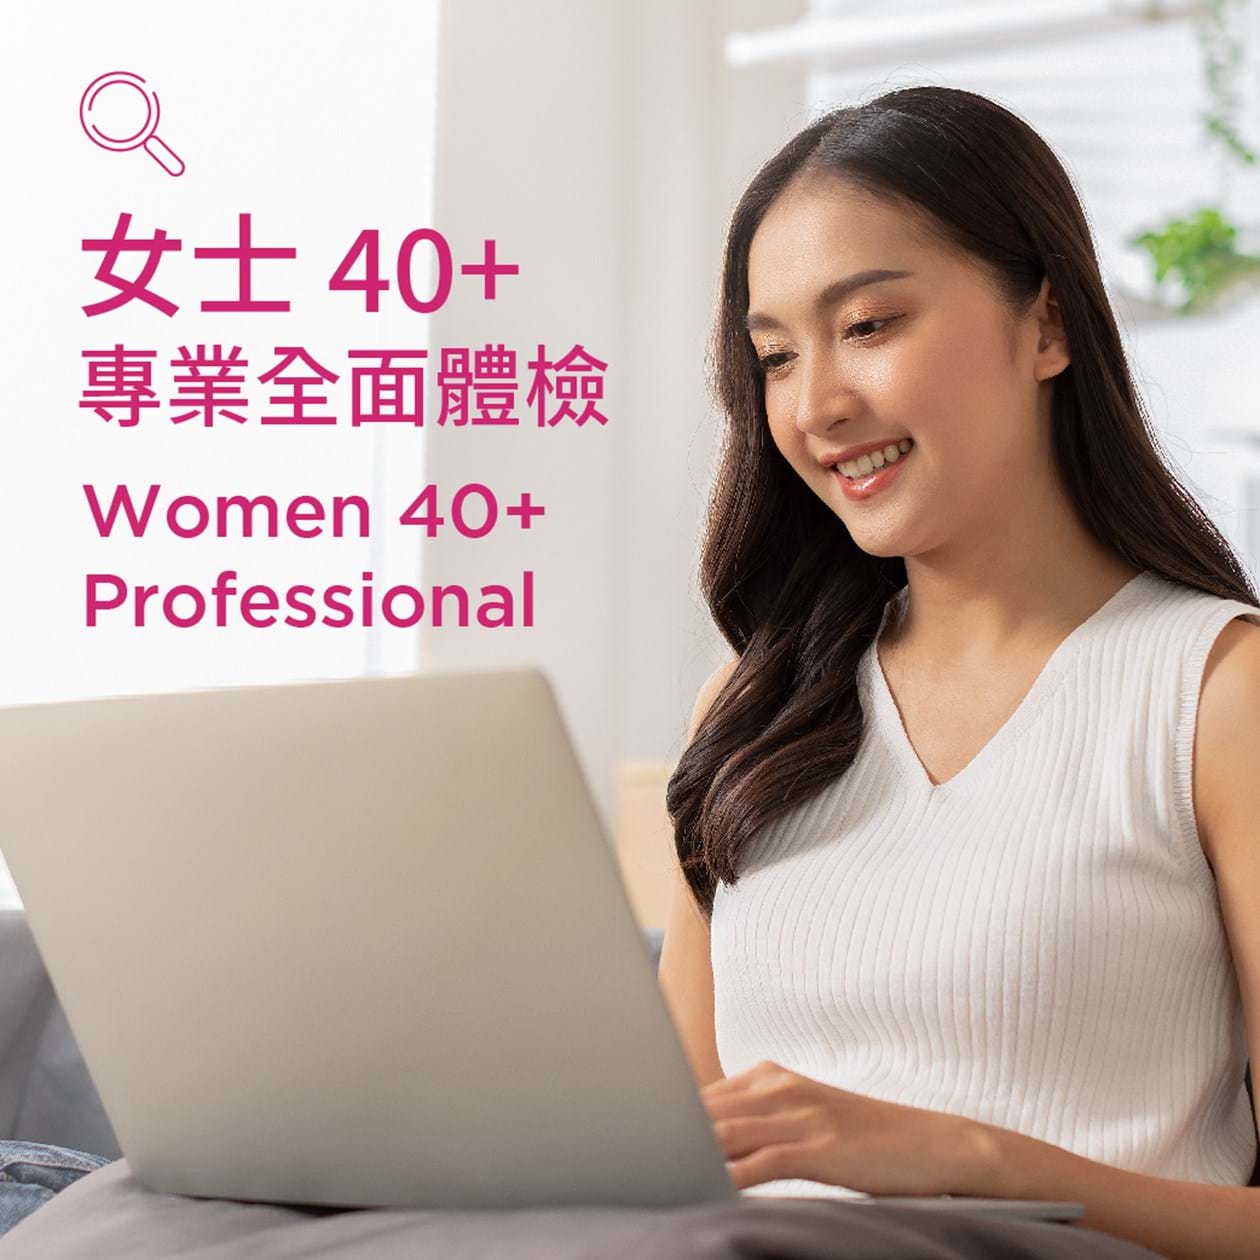 Women 40+ (Professional)